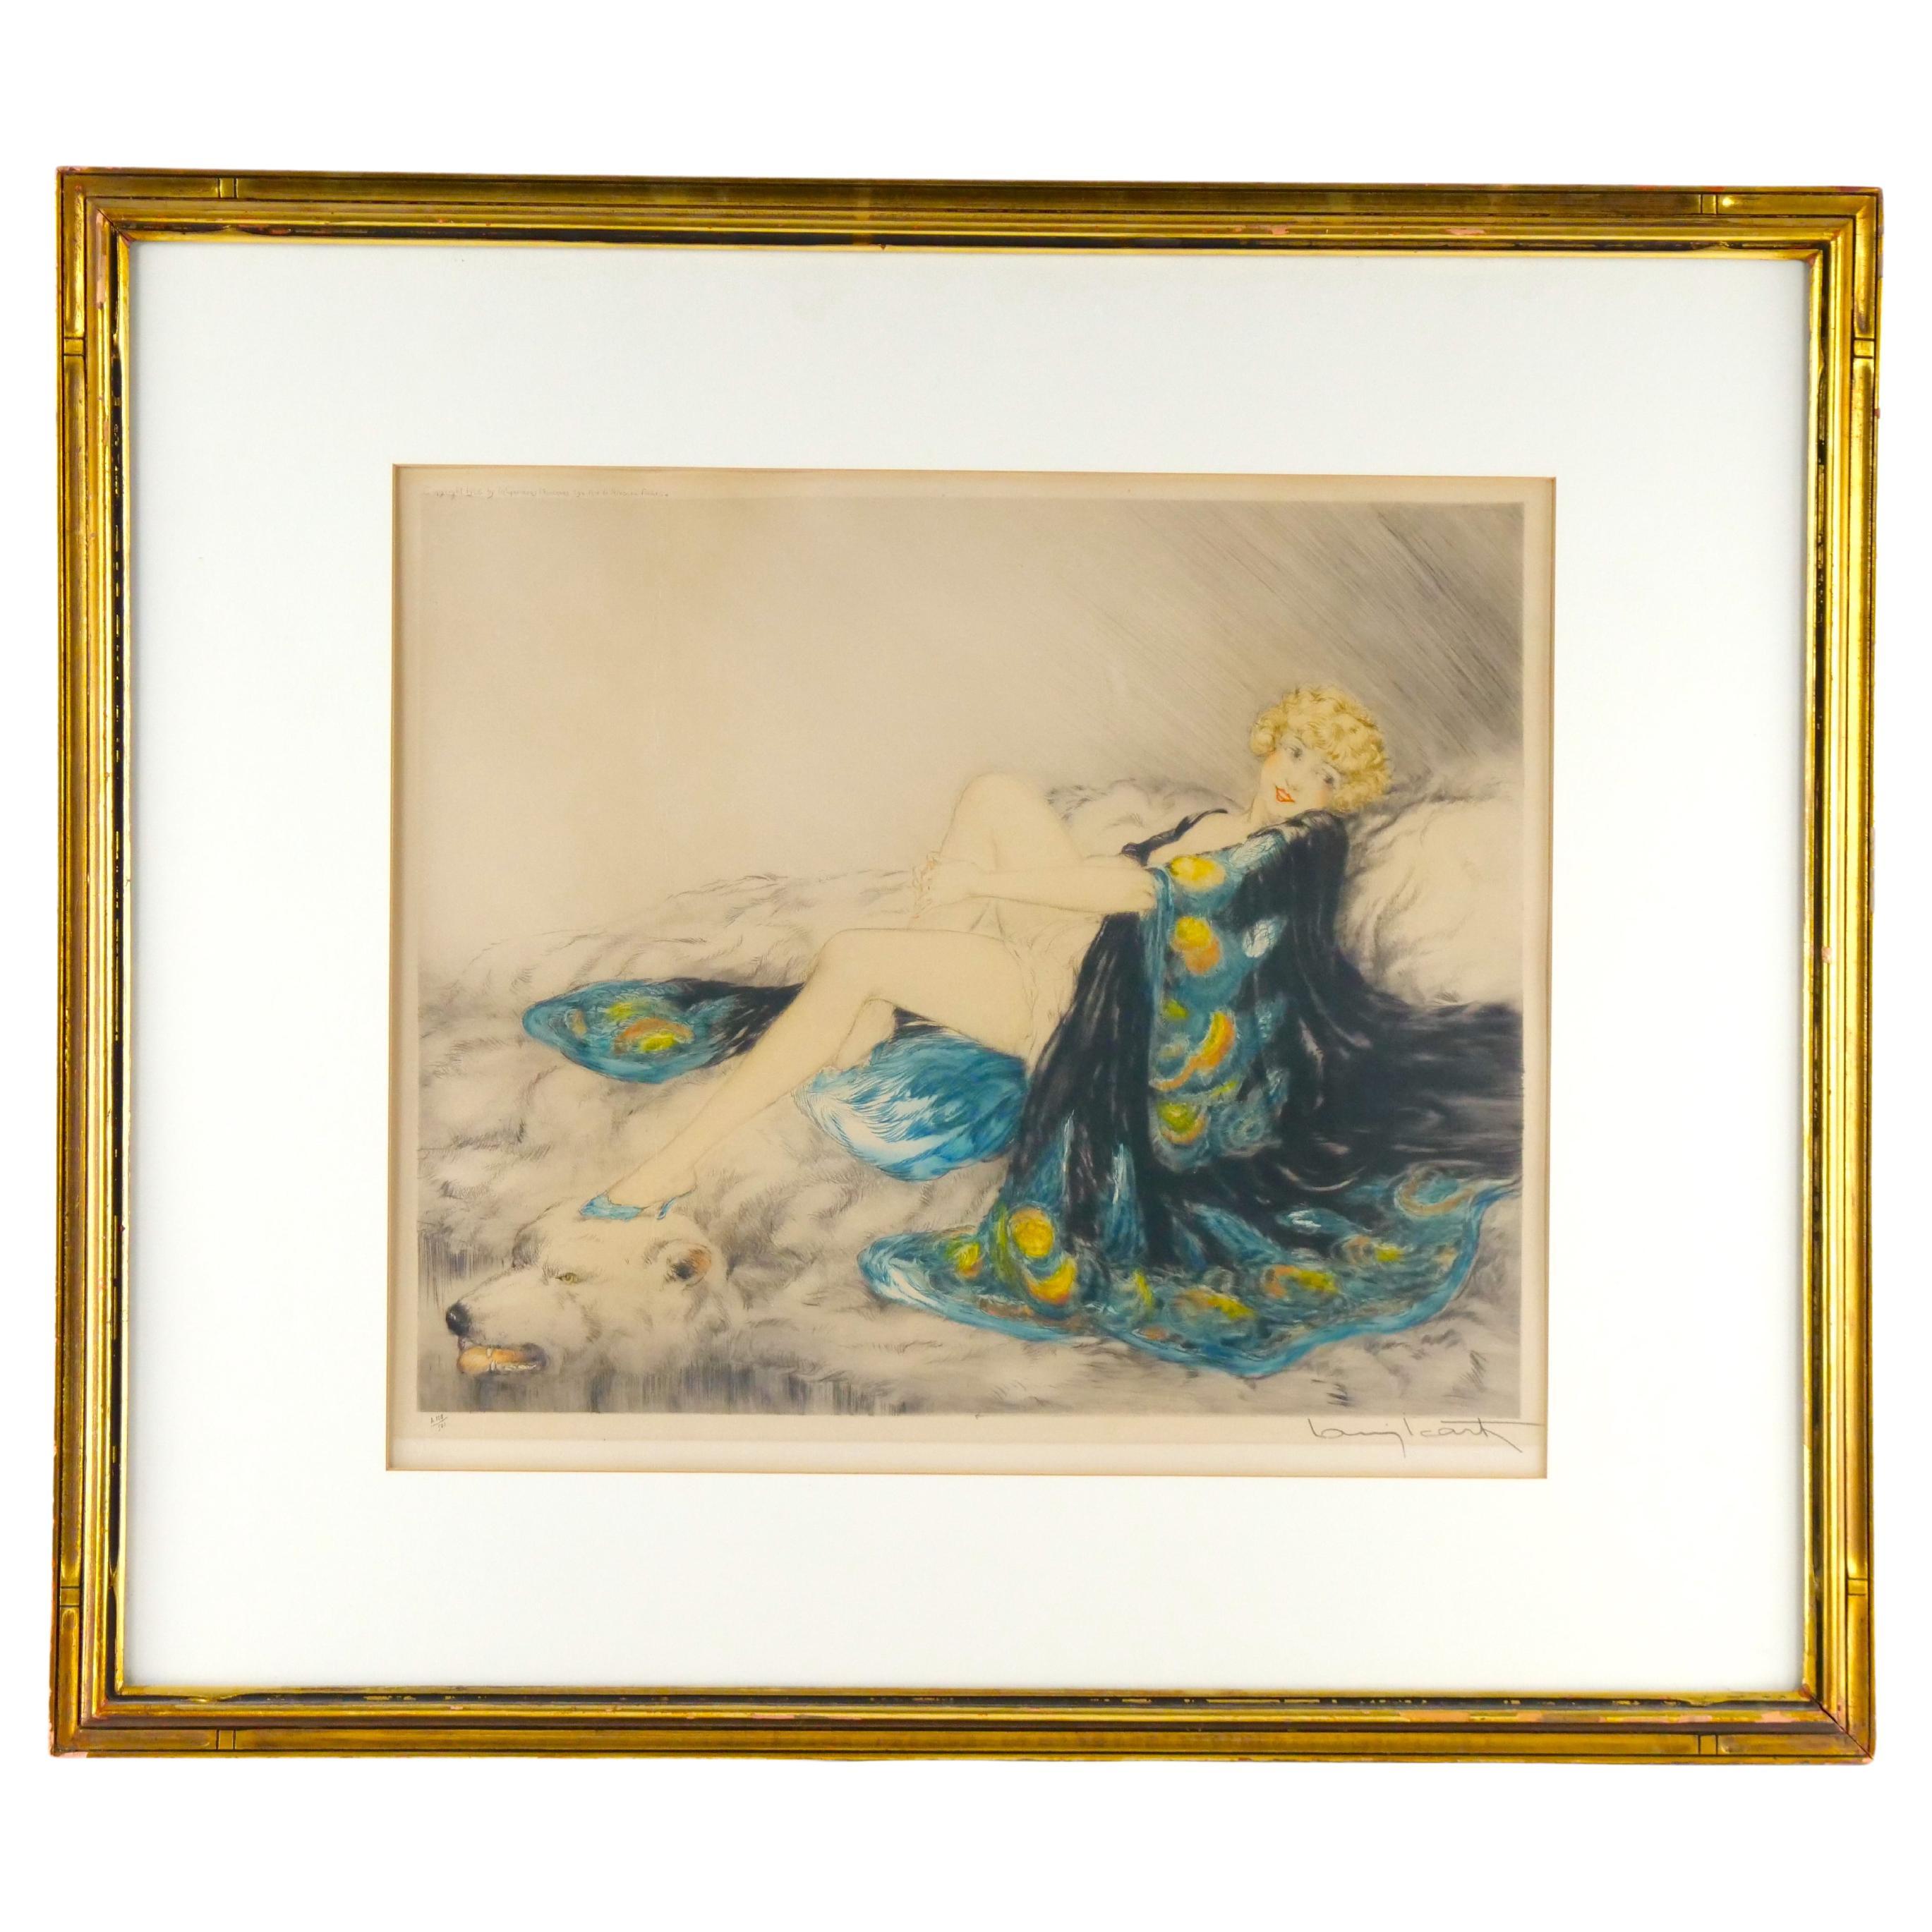 Louis Icart Framed Etching of Female Beauty in Peacock Lingerie on Bearskin 1926